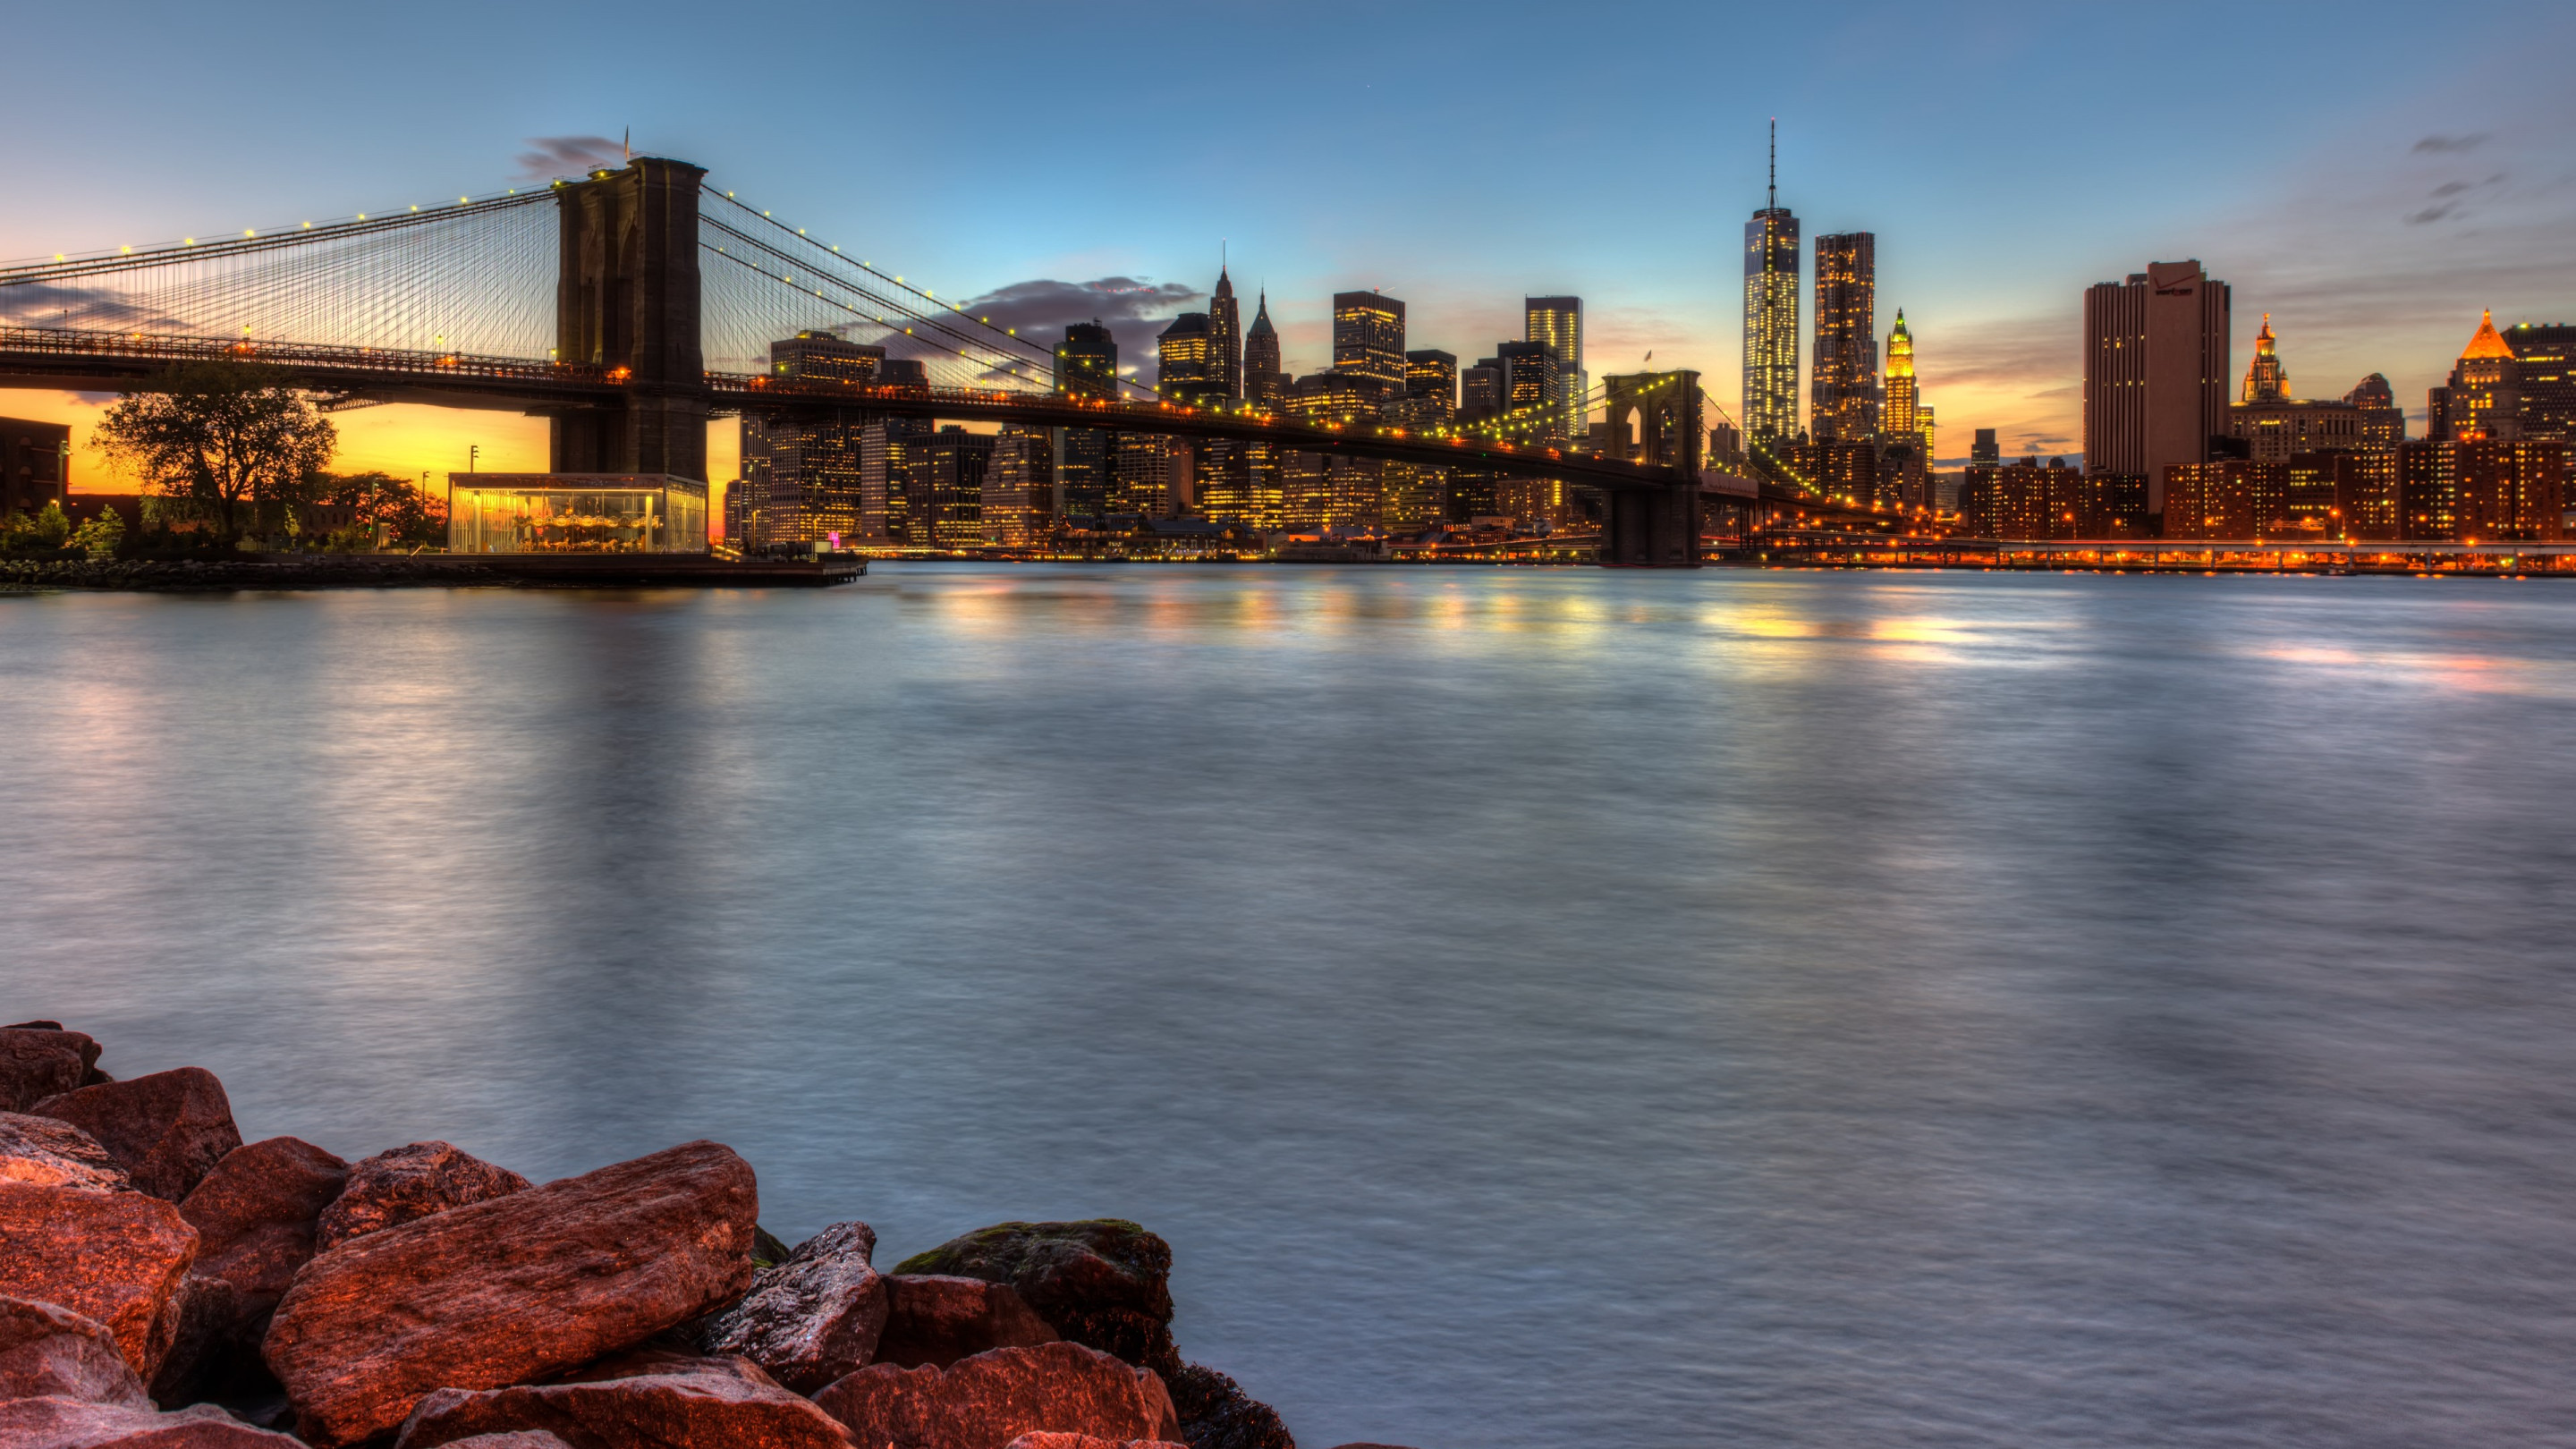 Brooklyn Bridge, NY, USA wallpaper 2880x1620